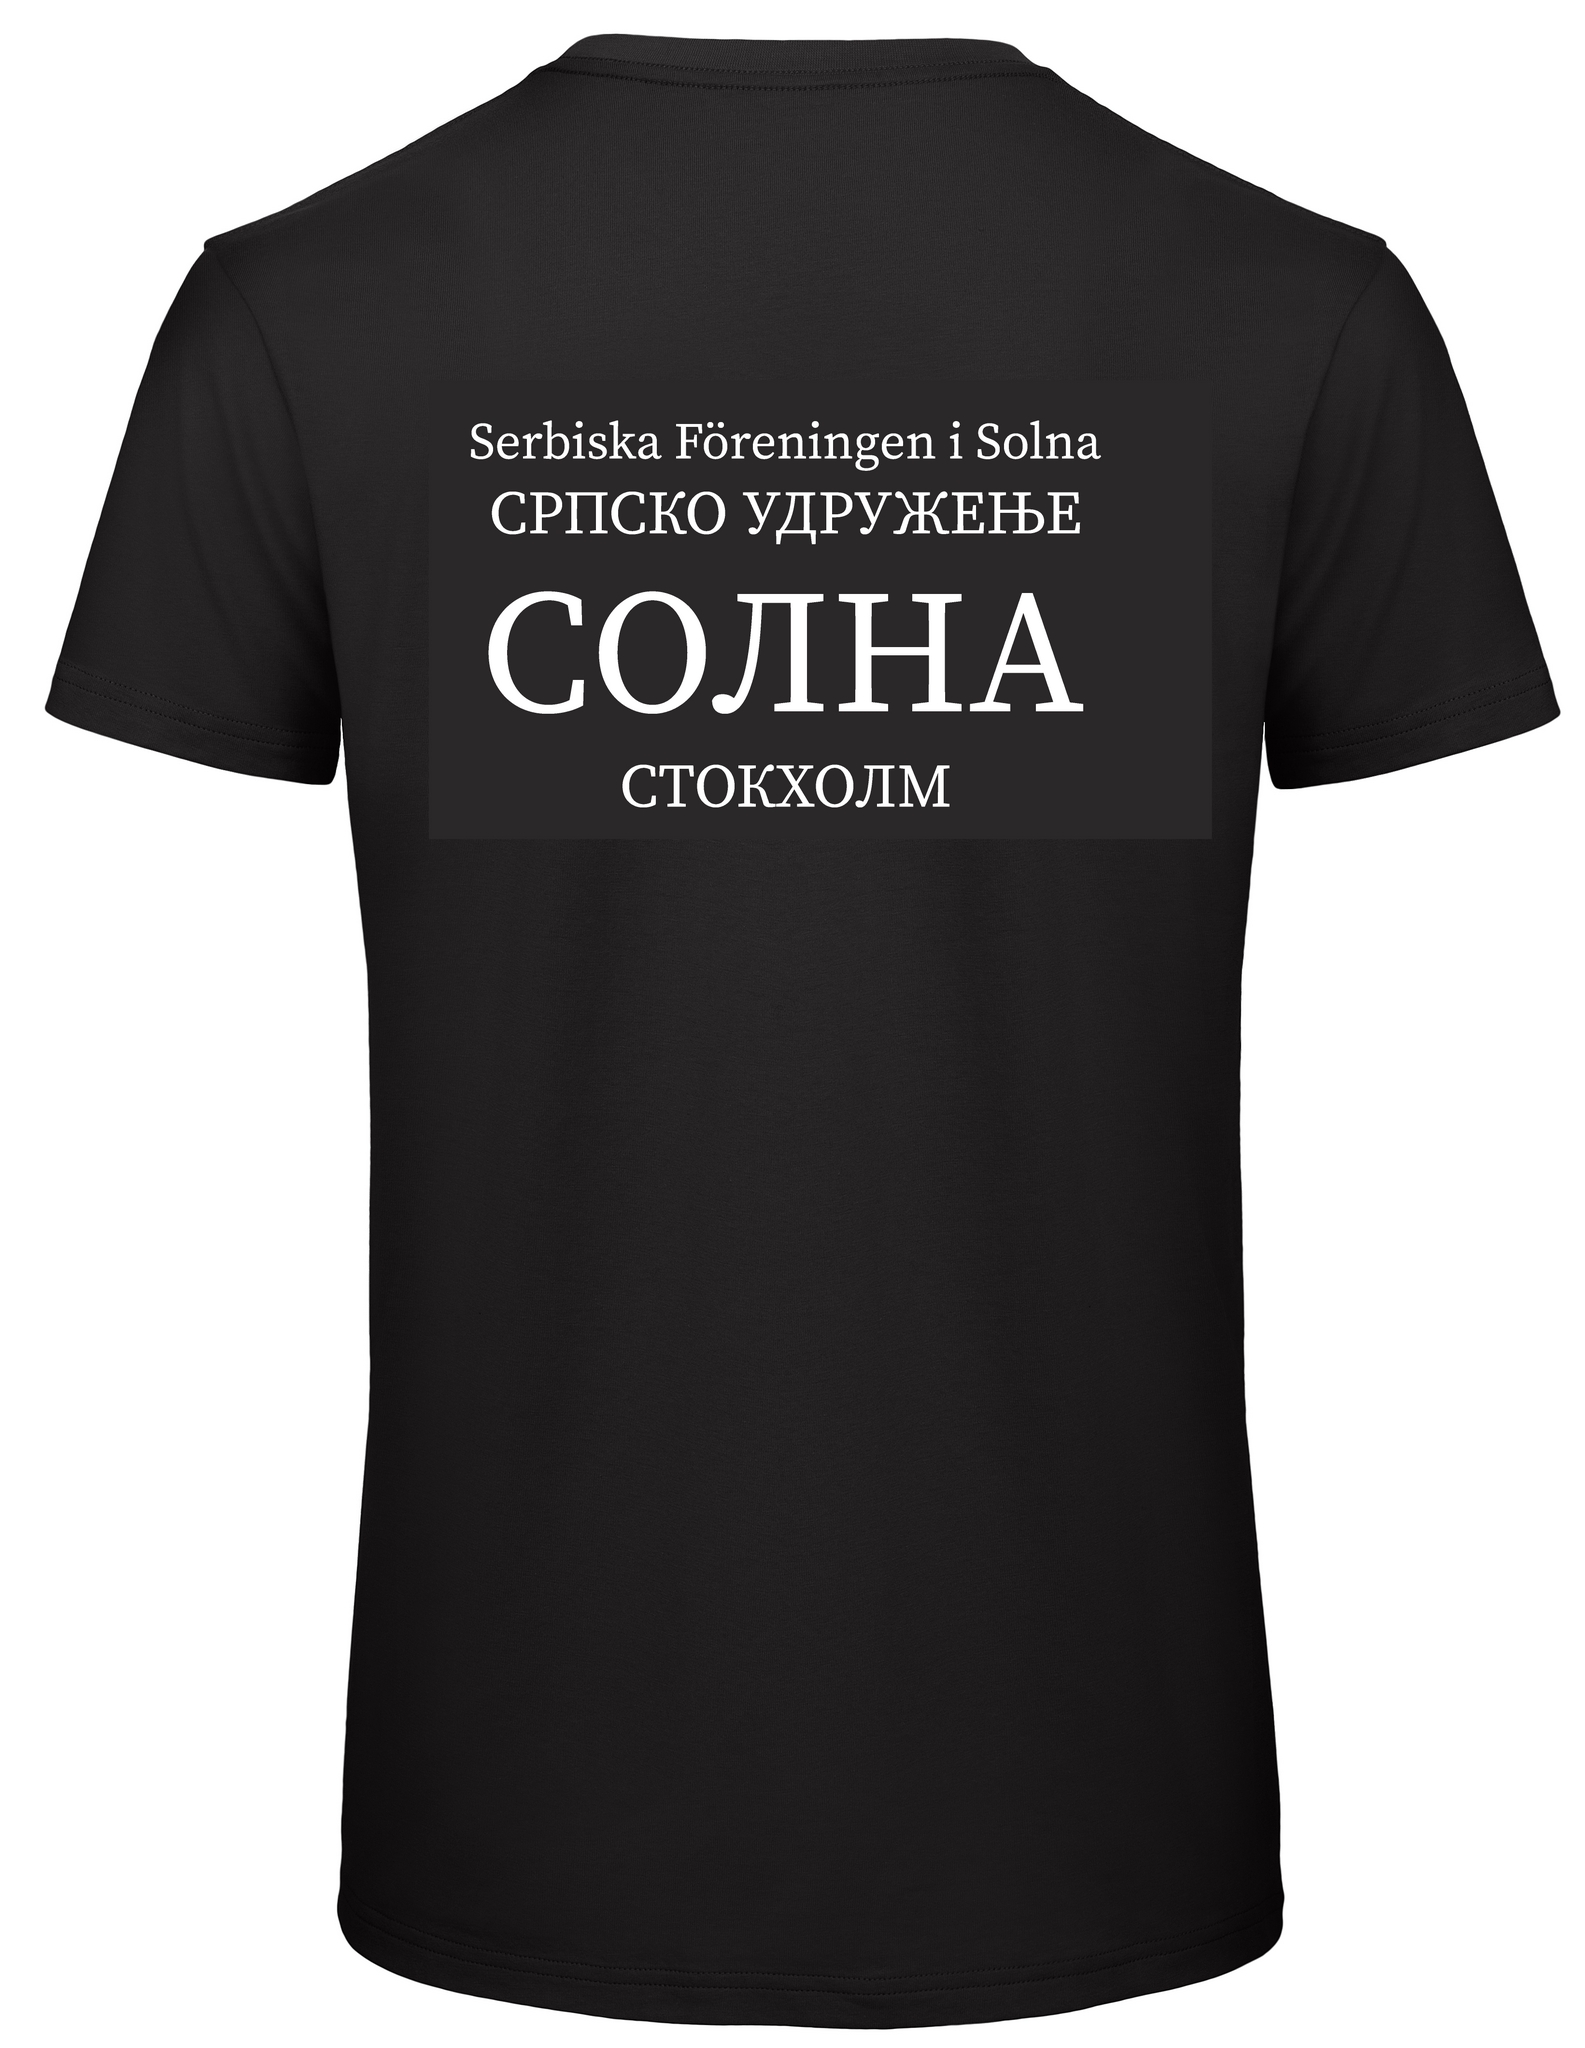 Solna T-shirt